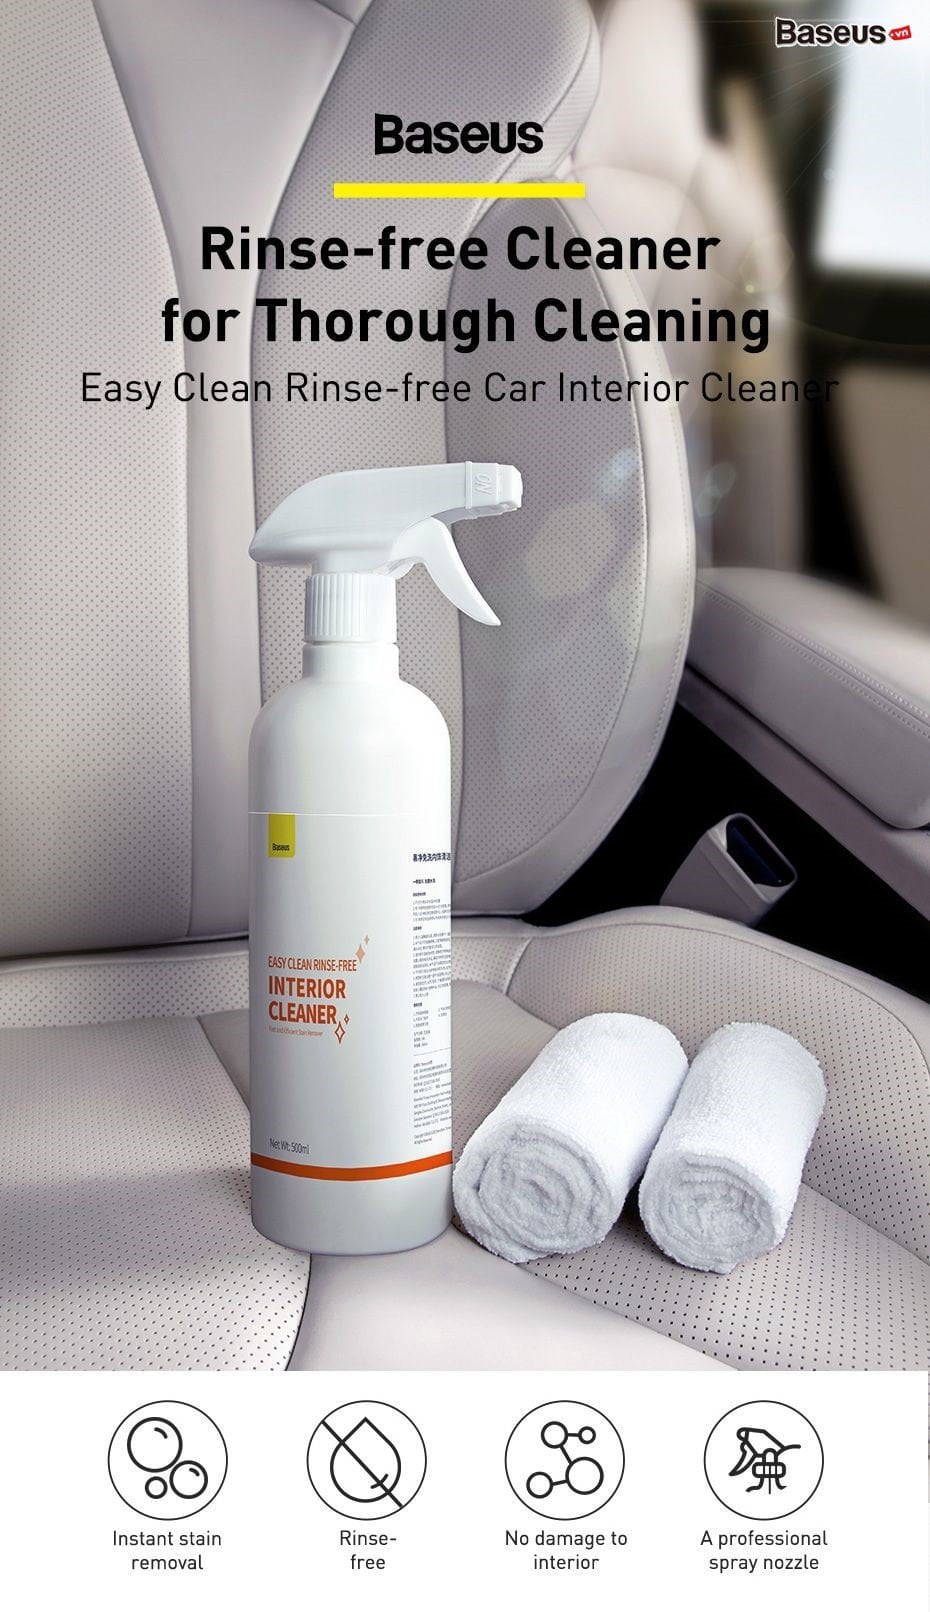 easy clean rinse free car interior cleaner images 02 285023aa5bdf4d768df3c071decd95ea